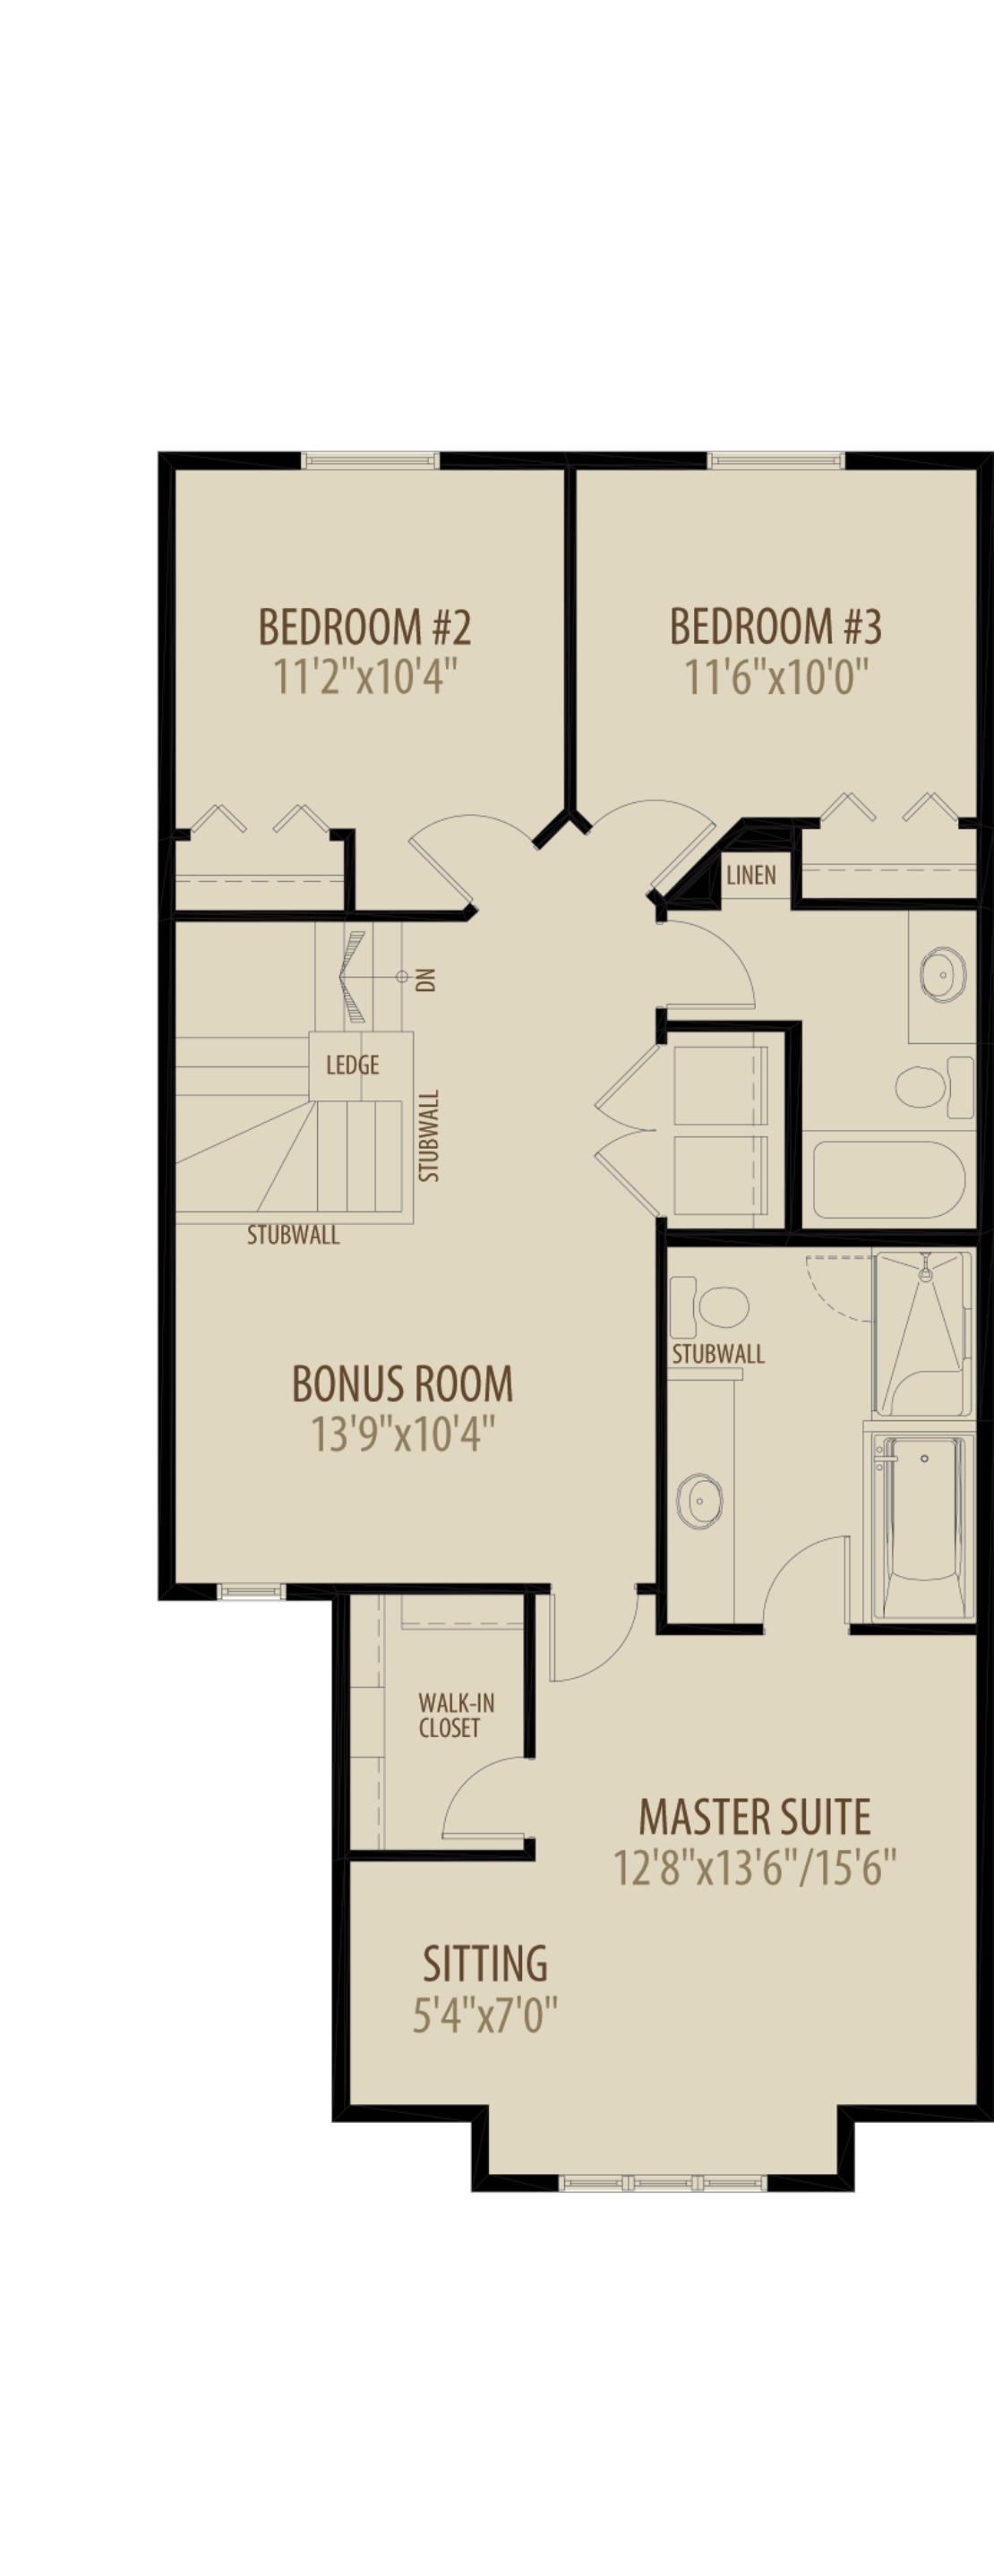 Optional Bonus Room adds 241 sq ft